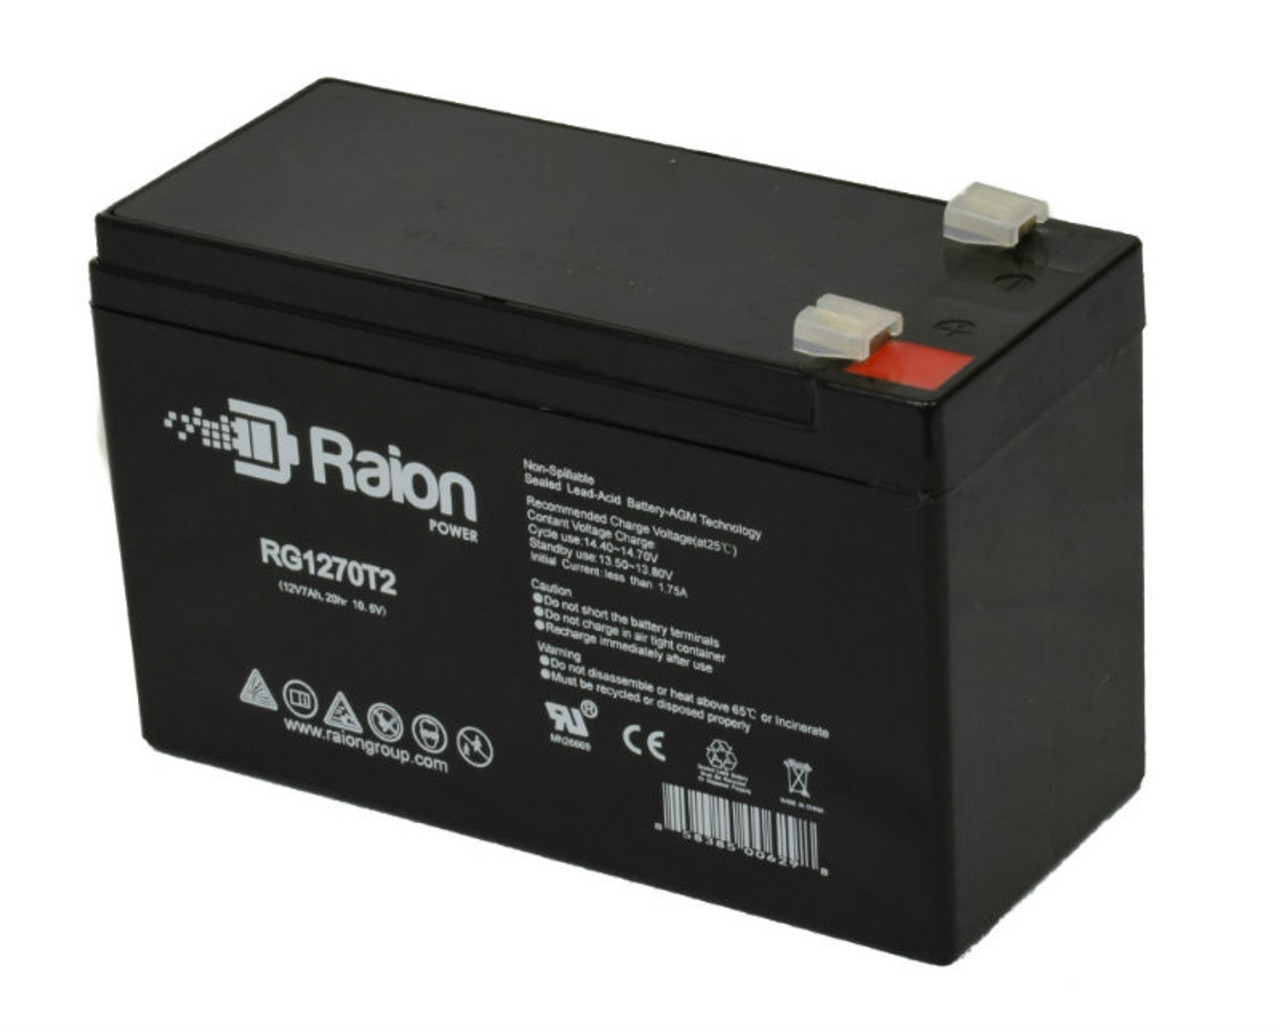 Raion Power RG1270T2 12V 7Ah Lead Acid Battery for MotoTec 250W Electric Mini Bike